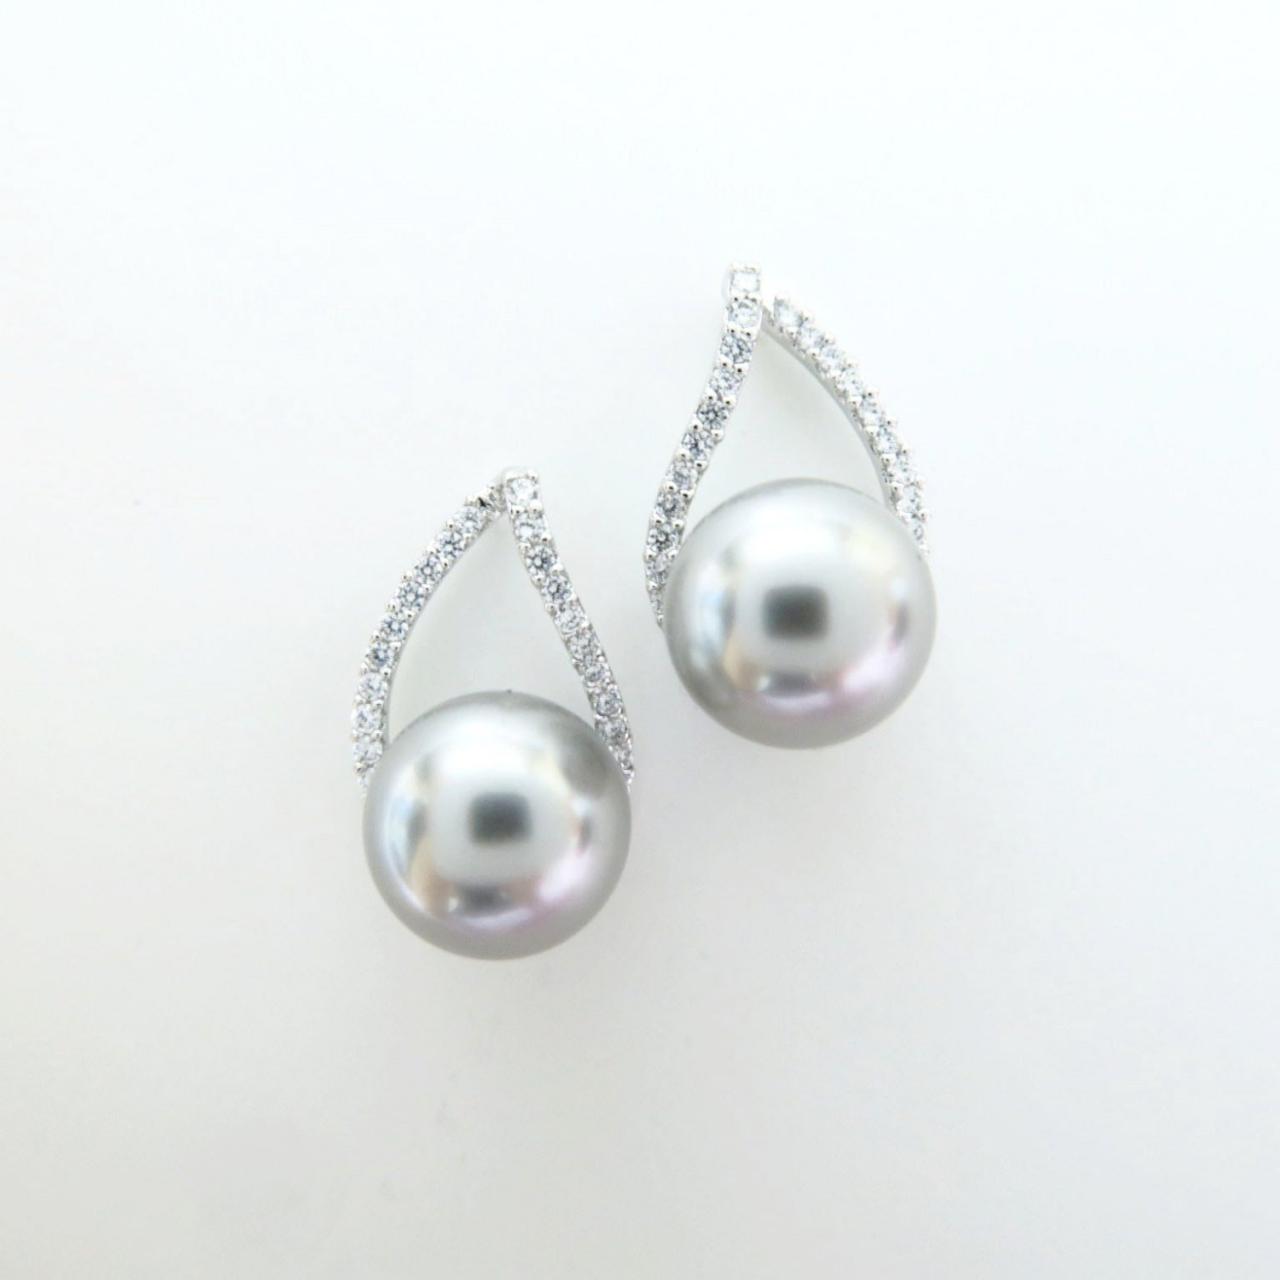 Light Grey Pearl Earrings Bridal Pearl Stud Earrings Swarovski 10mm Pearl Wedding Earrings Cubic Zirconia Teardrop Bridesmaid Gift (e105)